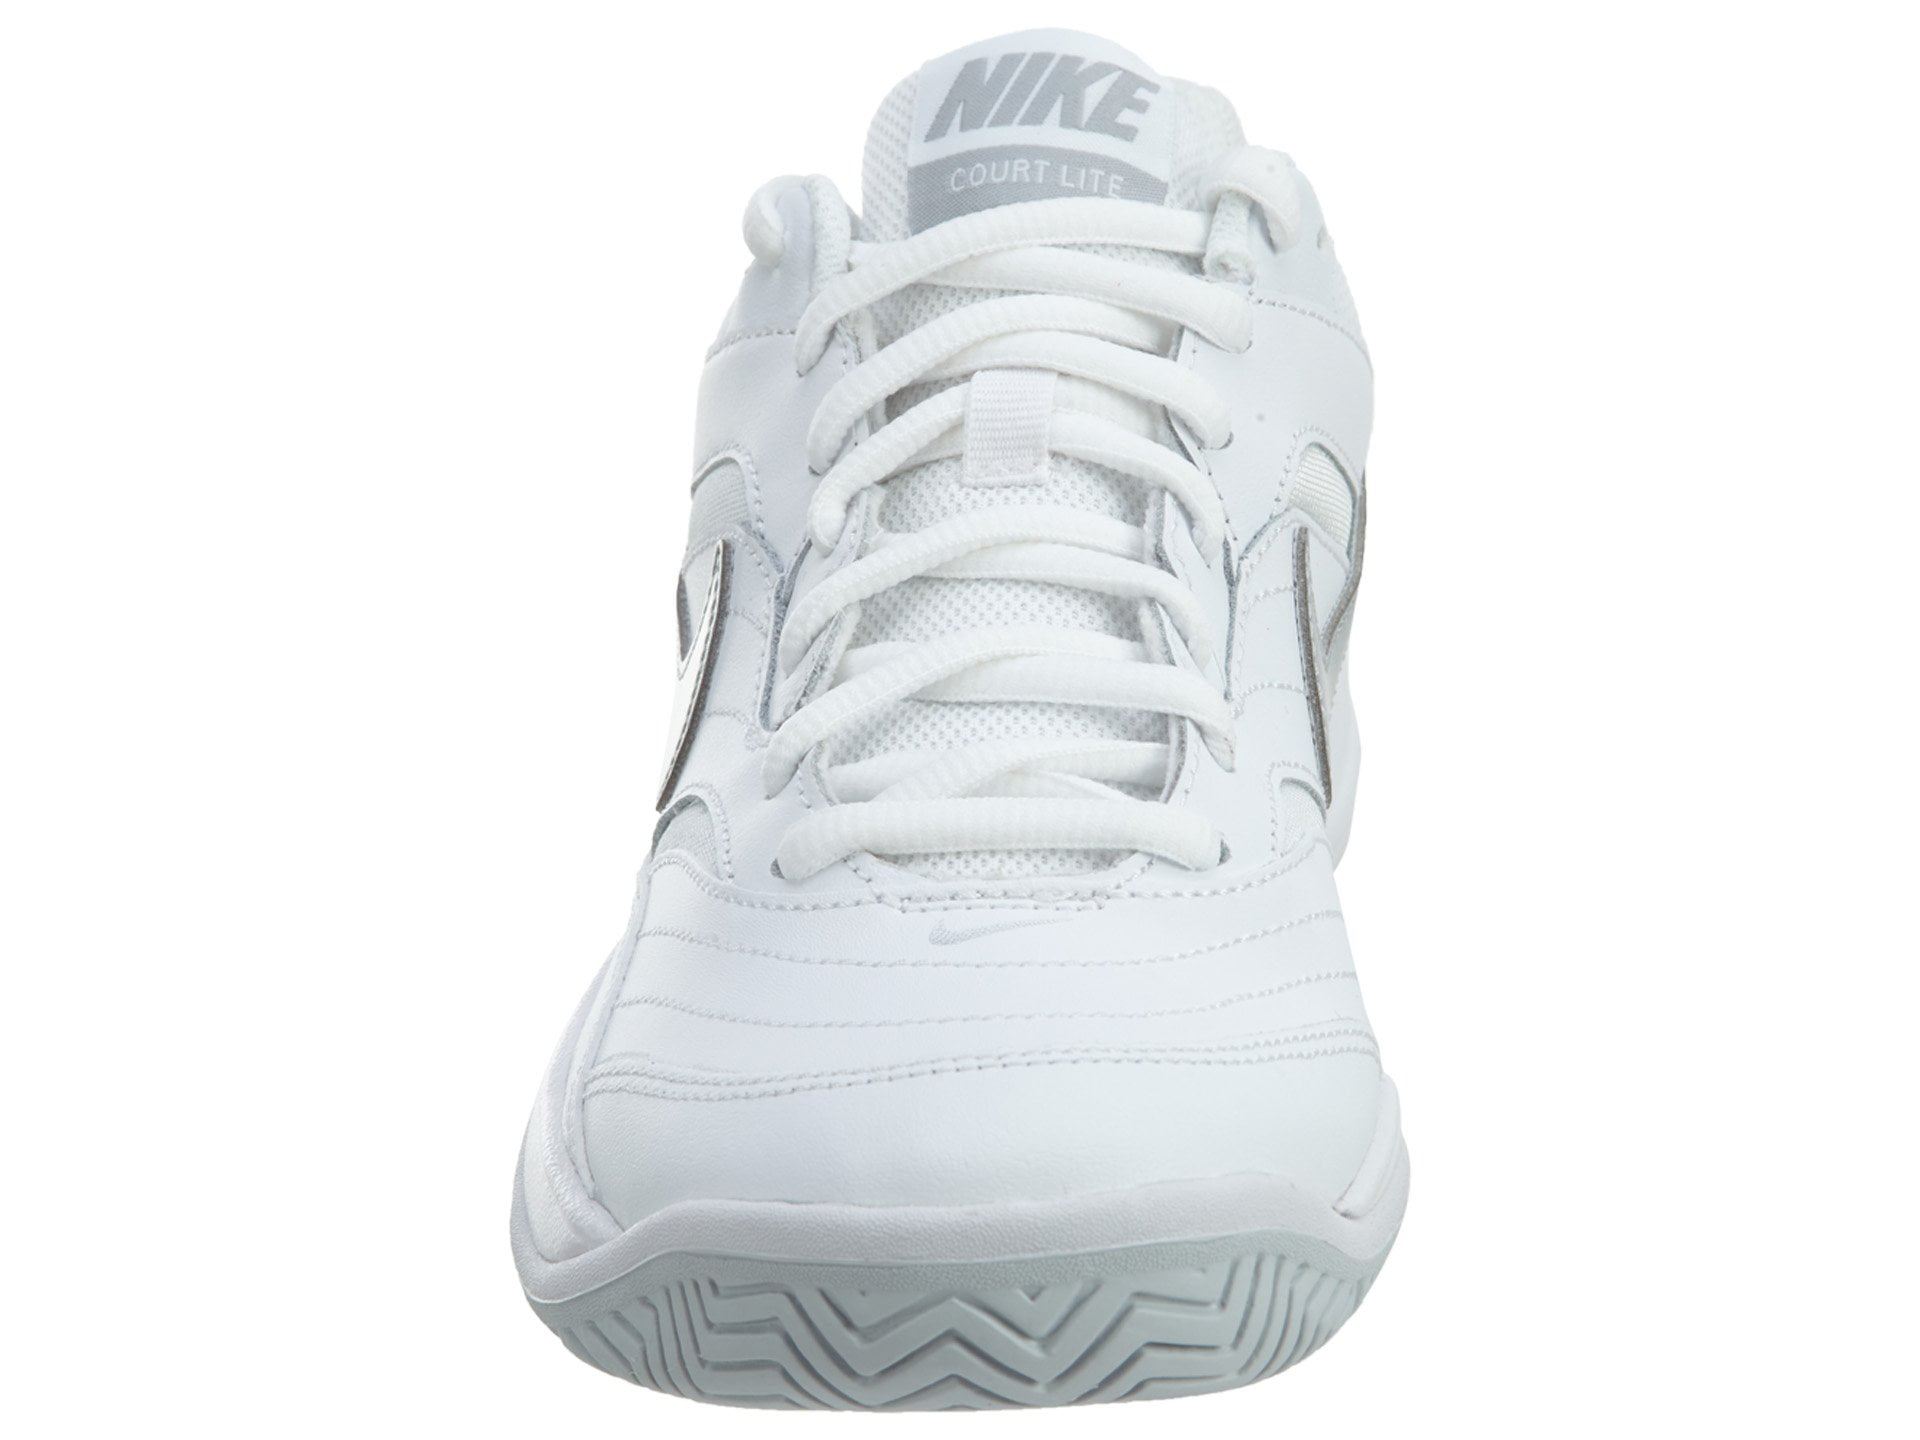 Nike Women's Lite Tennis Shoe Glow-Vast Grey, 5) - Walmart.com